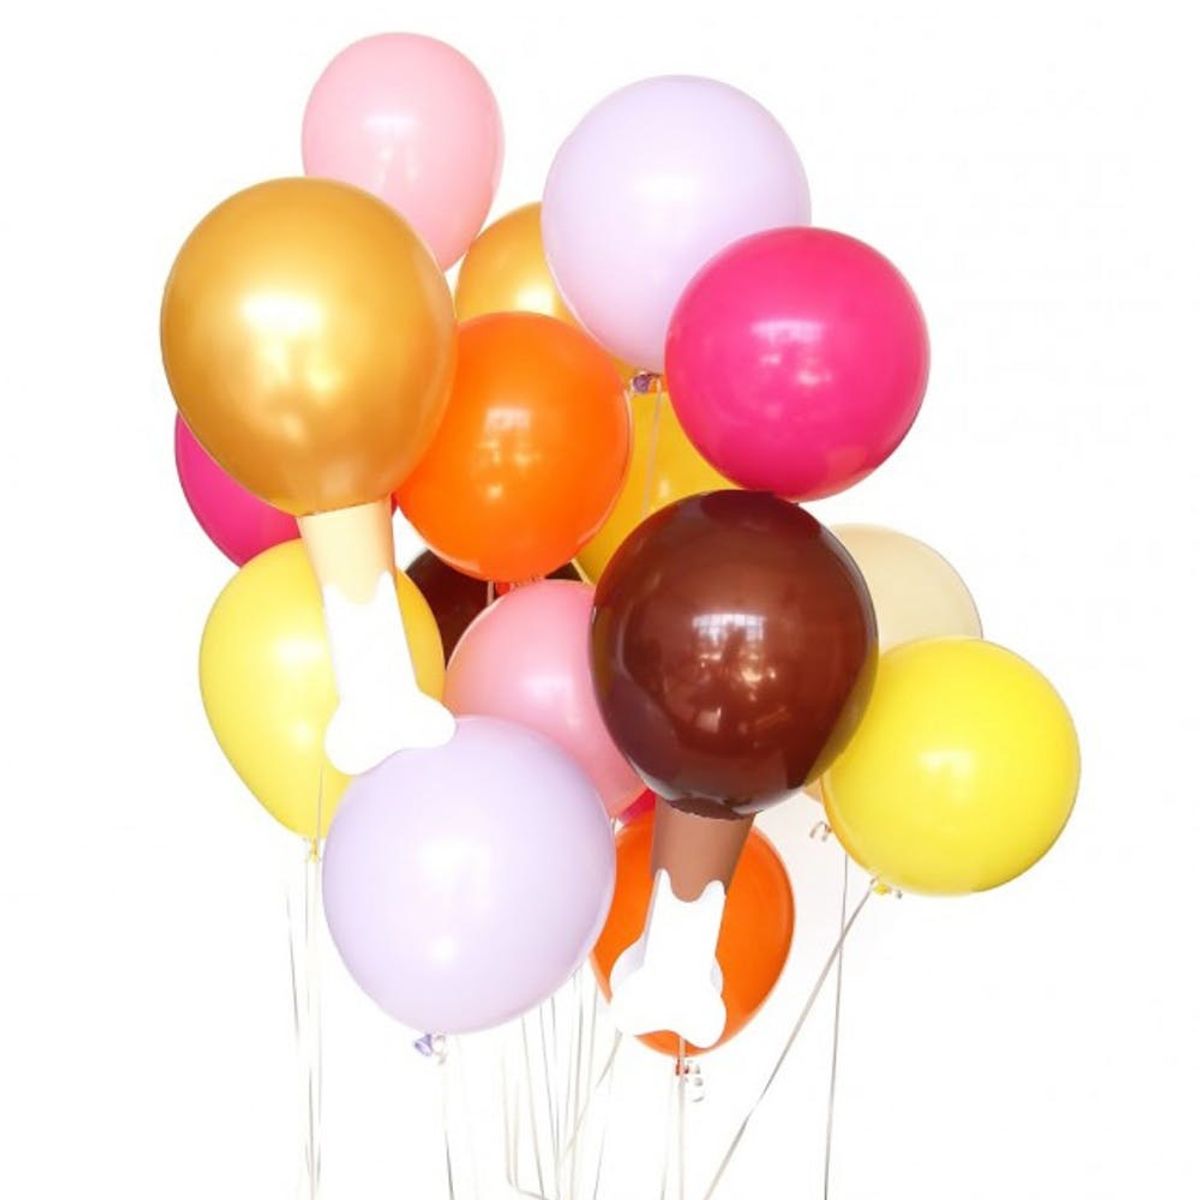 What to Make This Weekend: Emoji Turkey Balloons, Pie Macarons + More